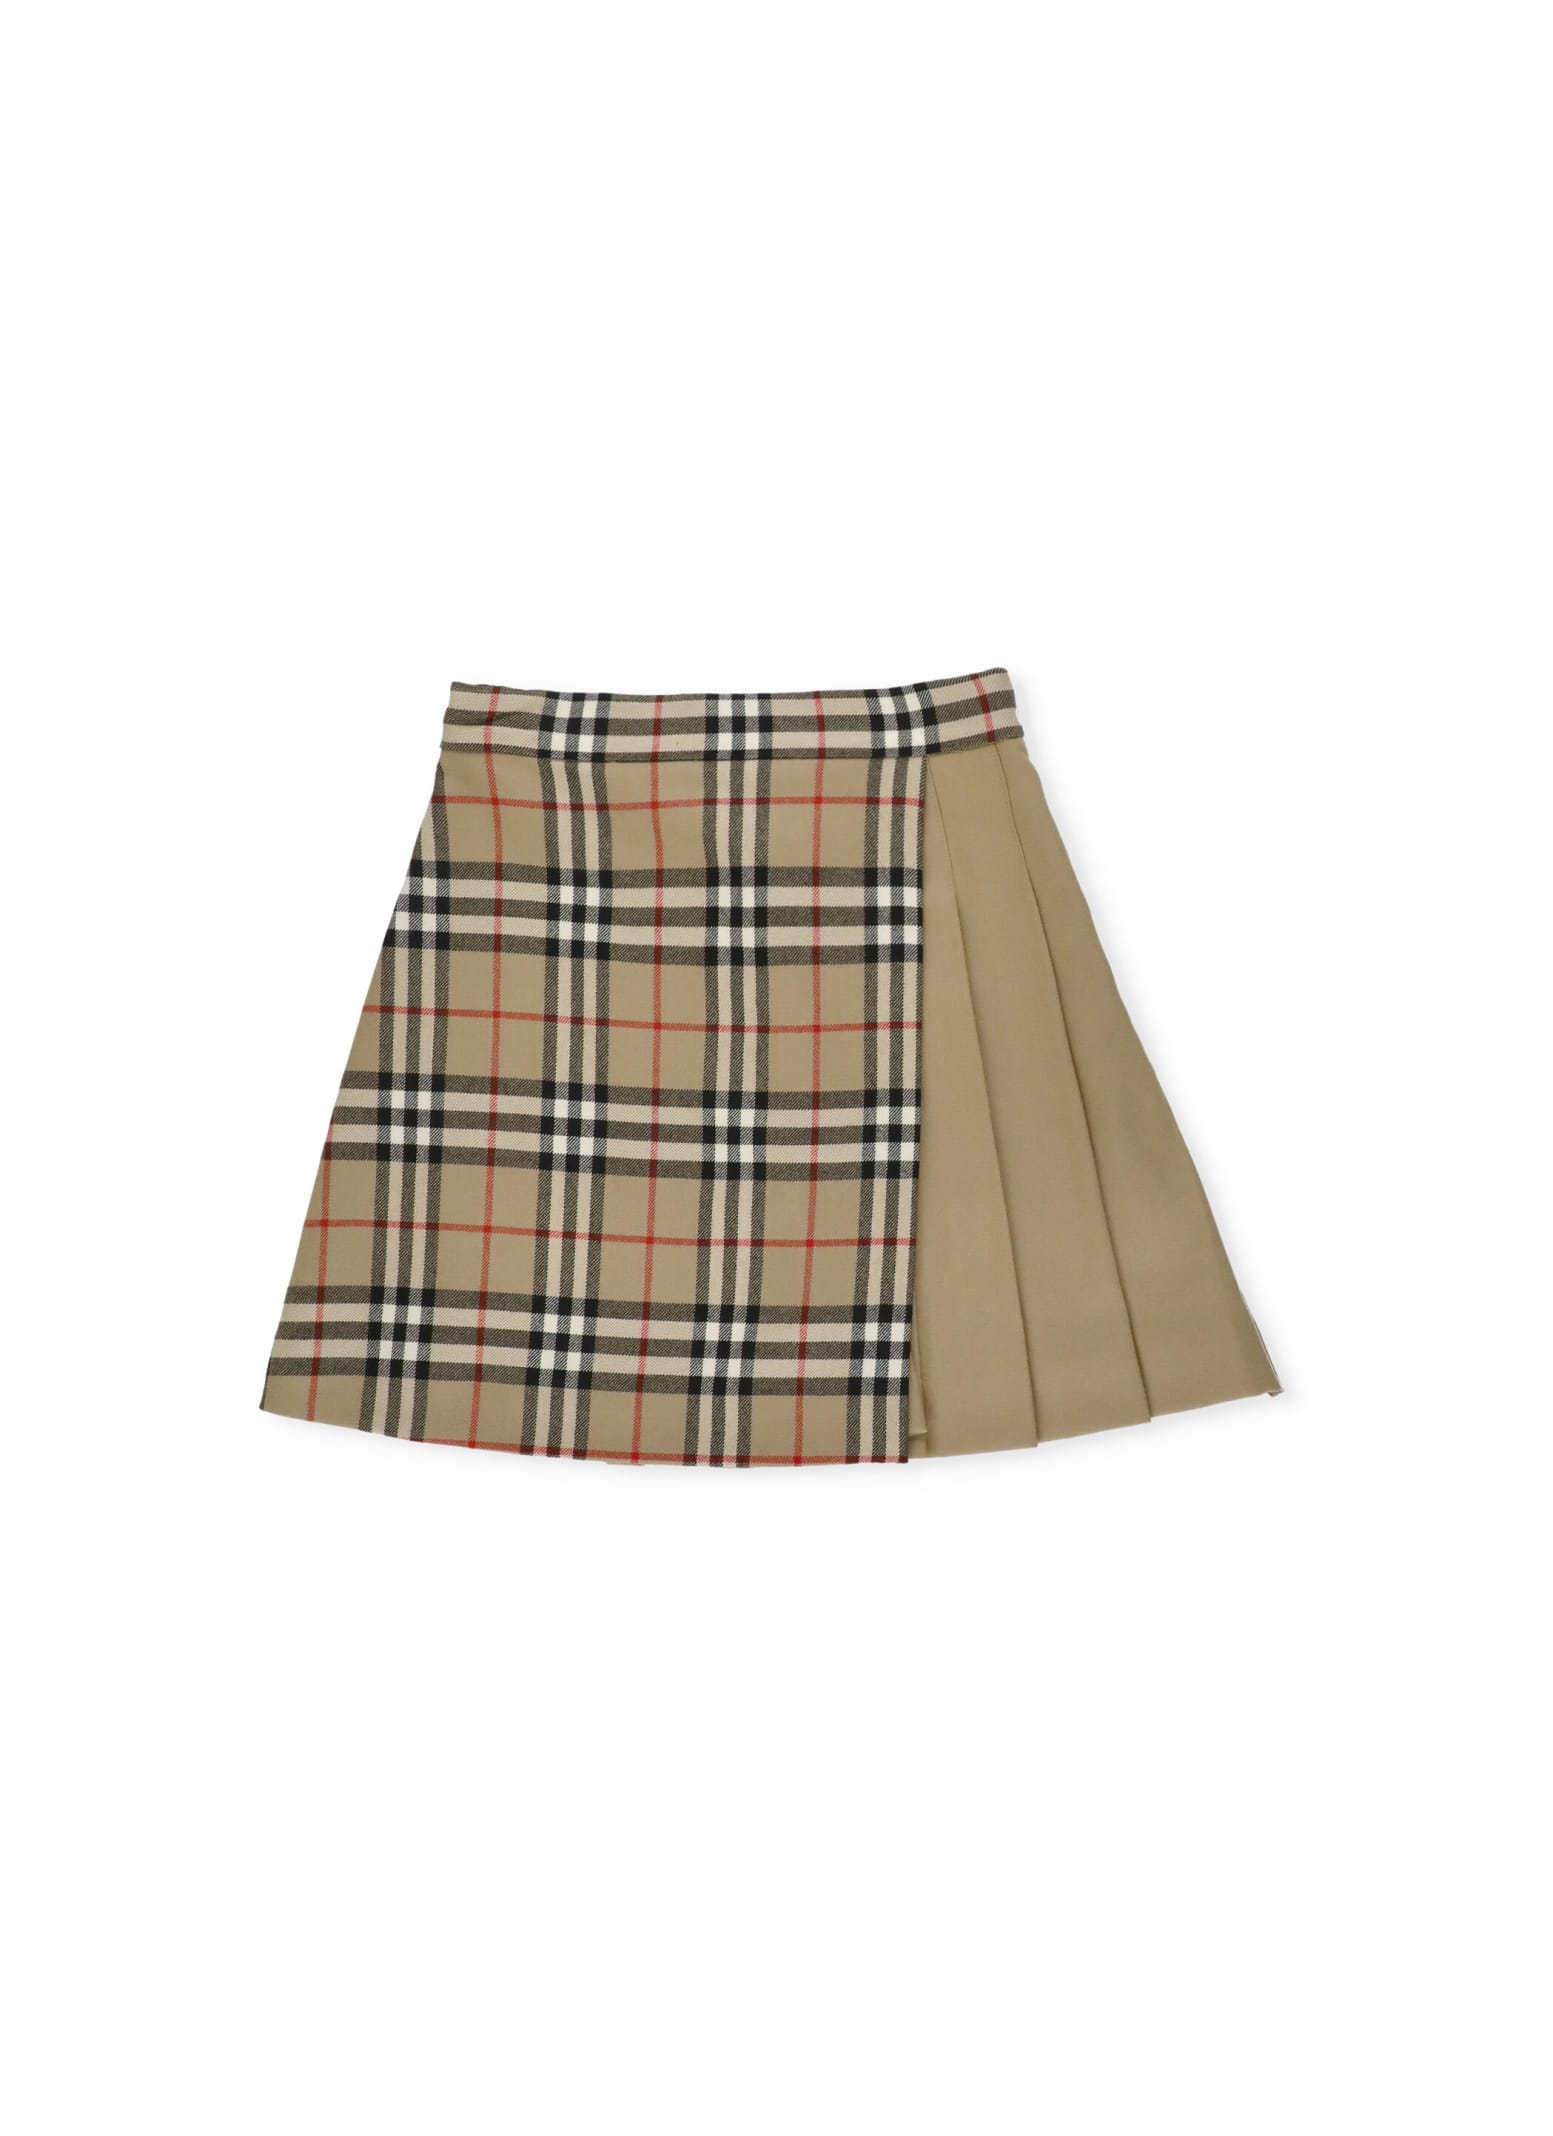 Burberry Check Pattern Skirt